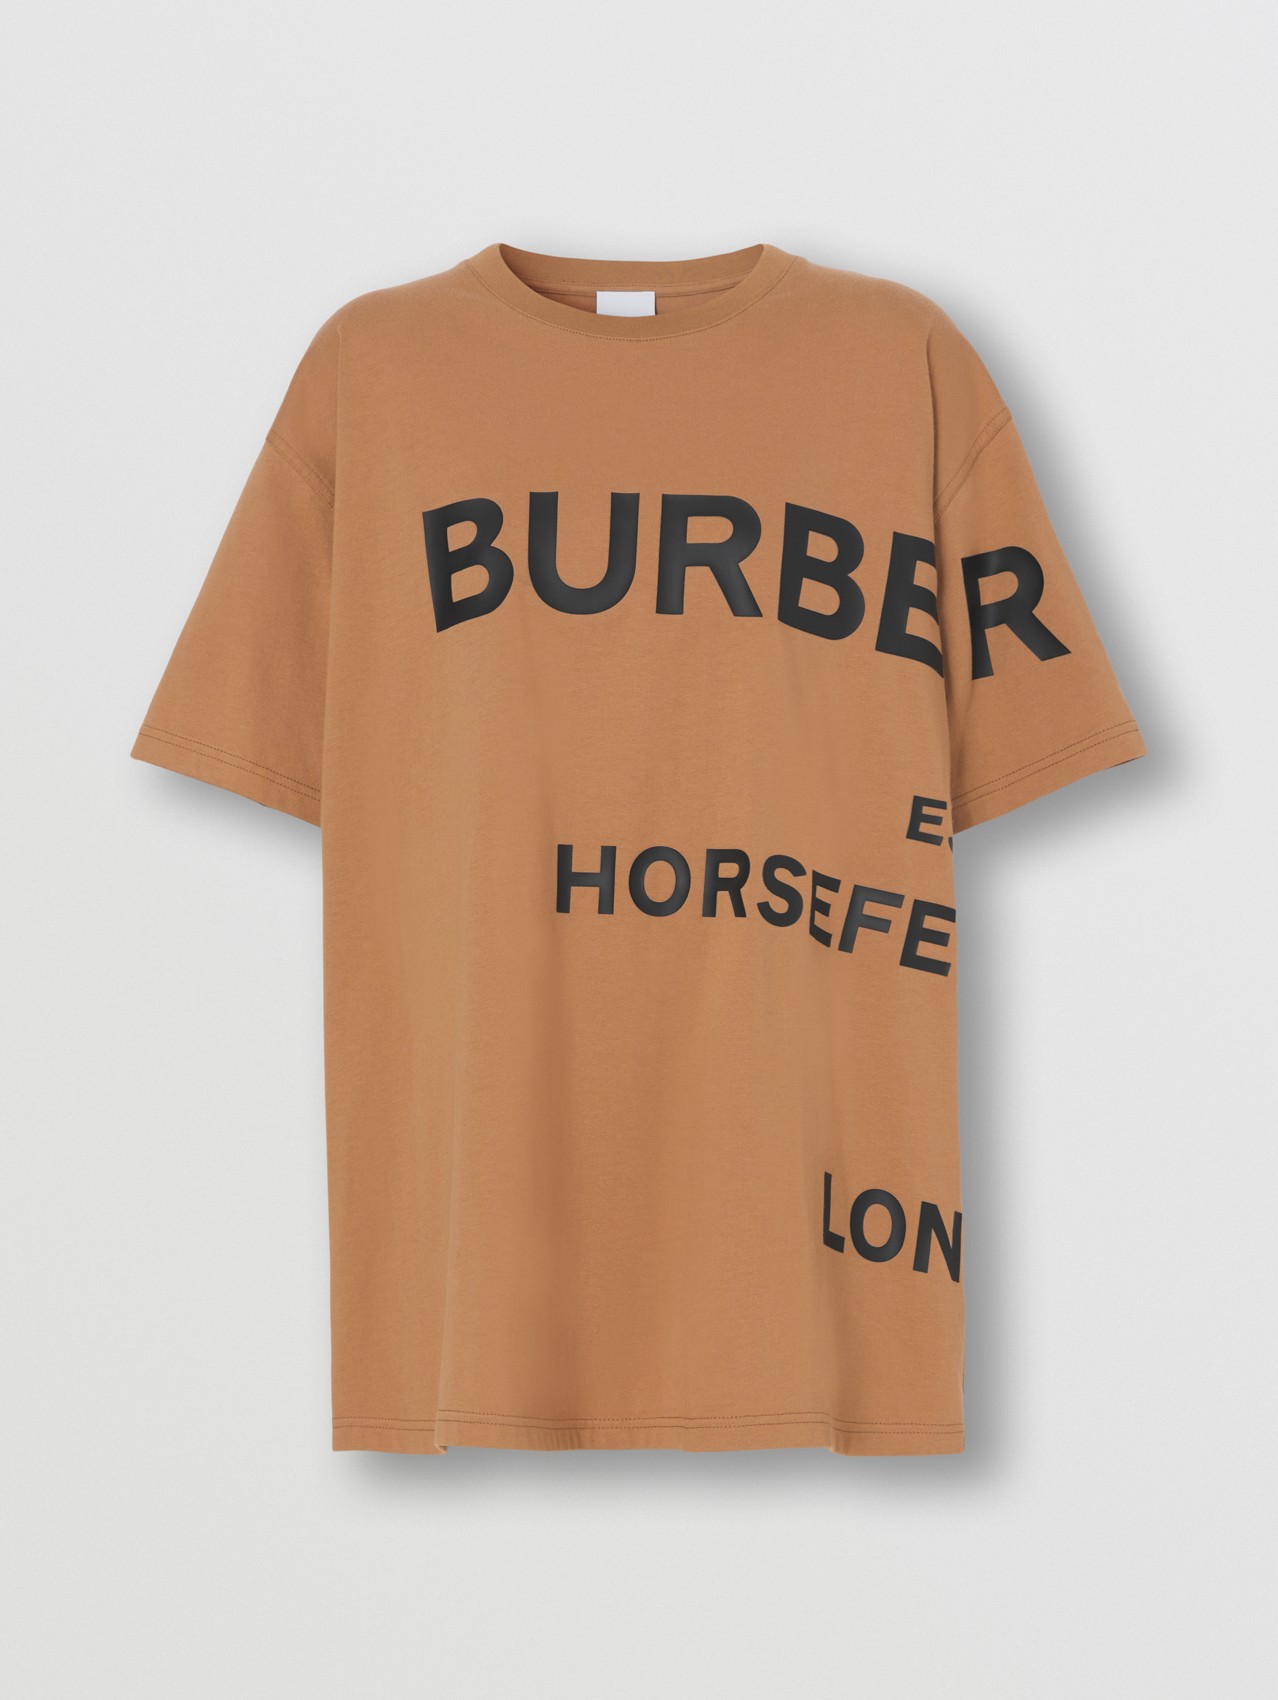 Kleding Dameskleding Tops & T-shirts Polos Burberry Brit womens Groene Polo met Ruitsluiting 